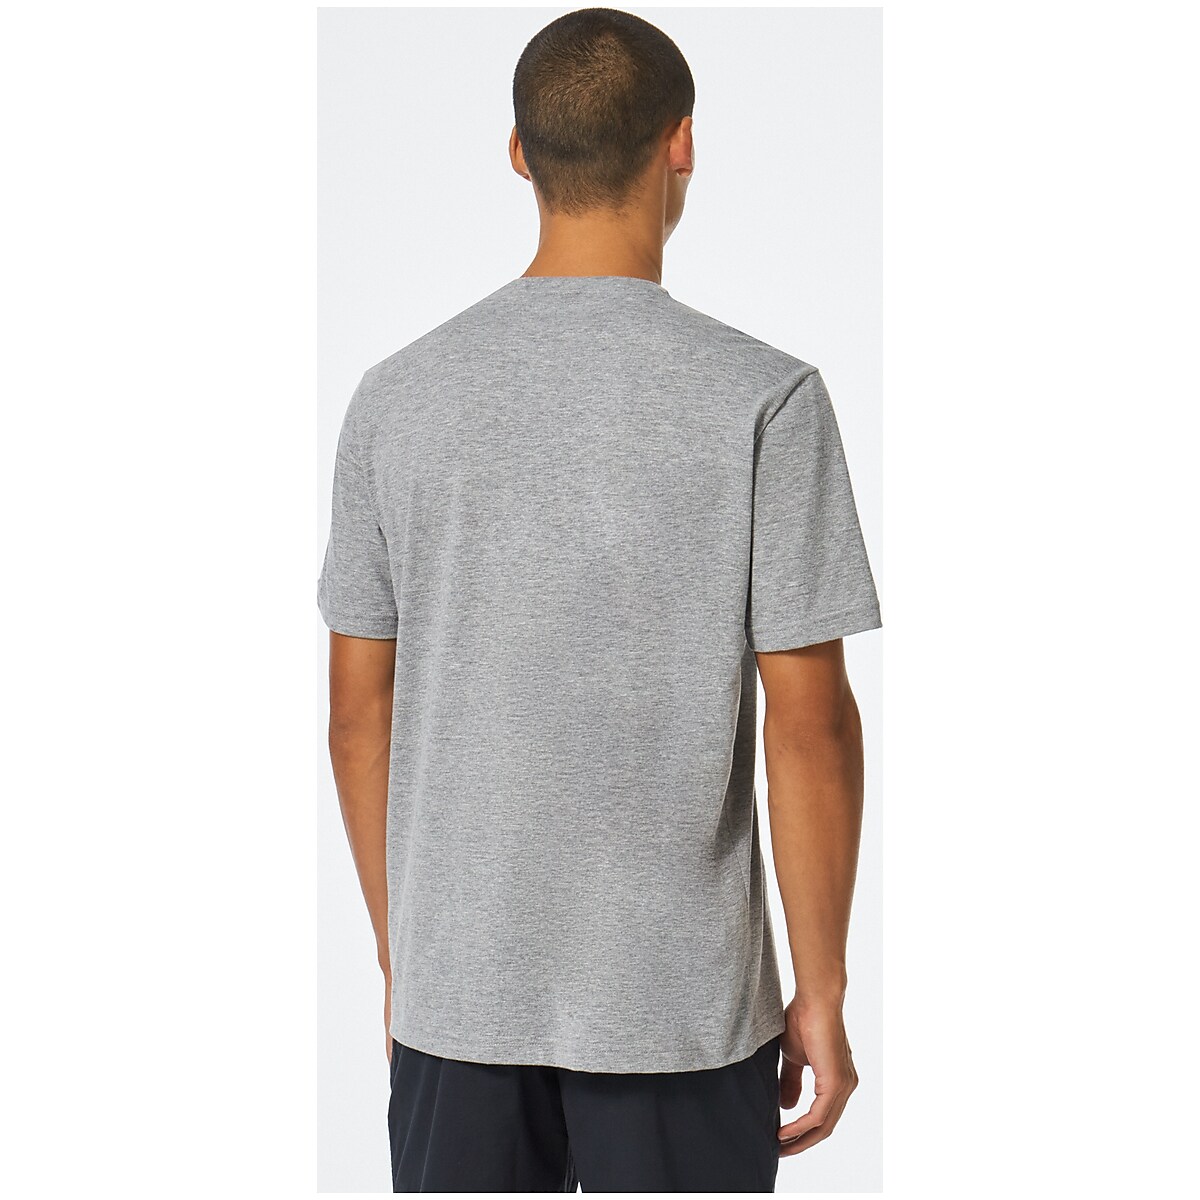 Oakley Retro Frog B1B Short Sleeve Crew Neck T-Shirt Grey